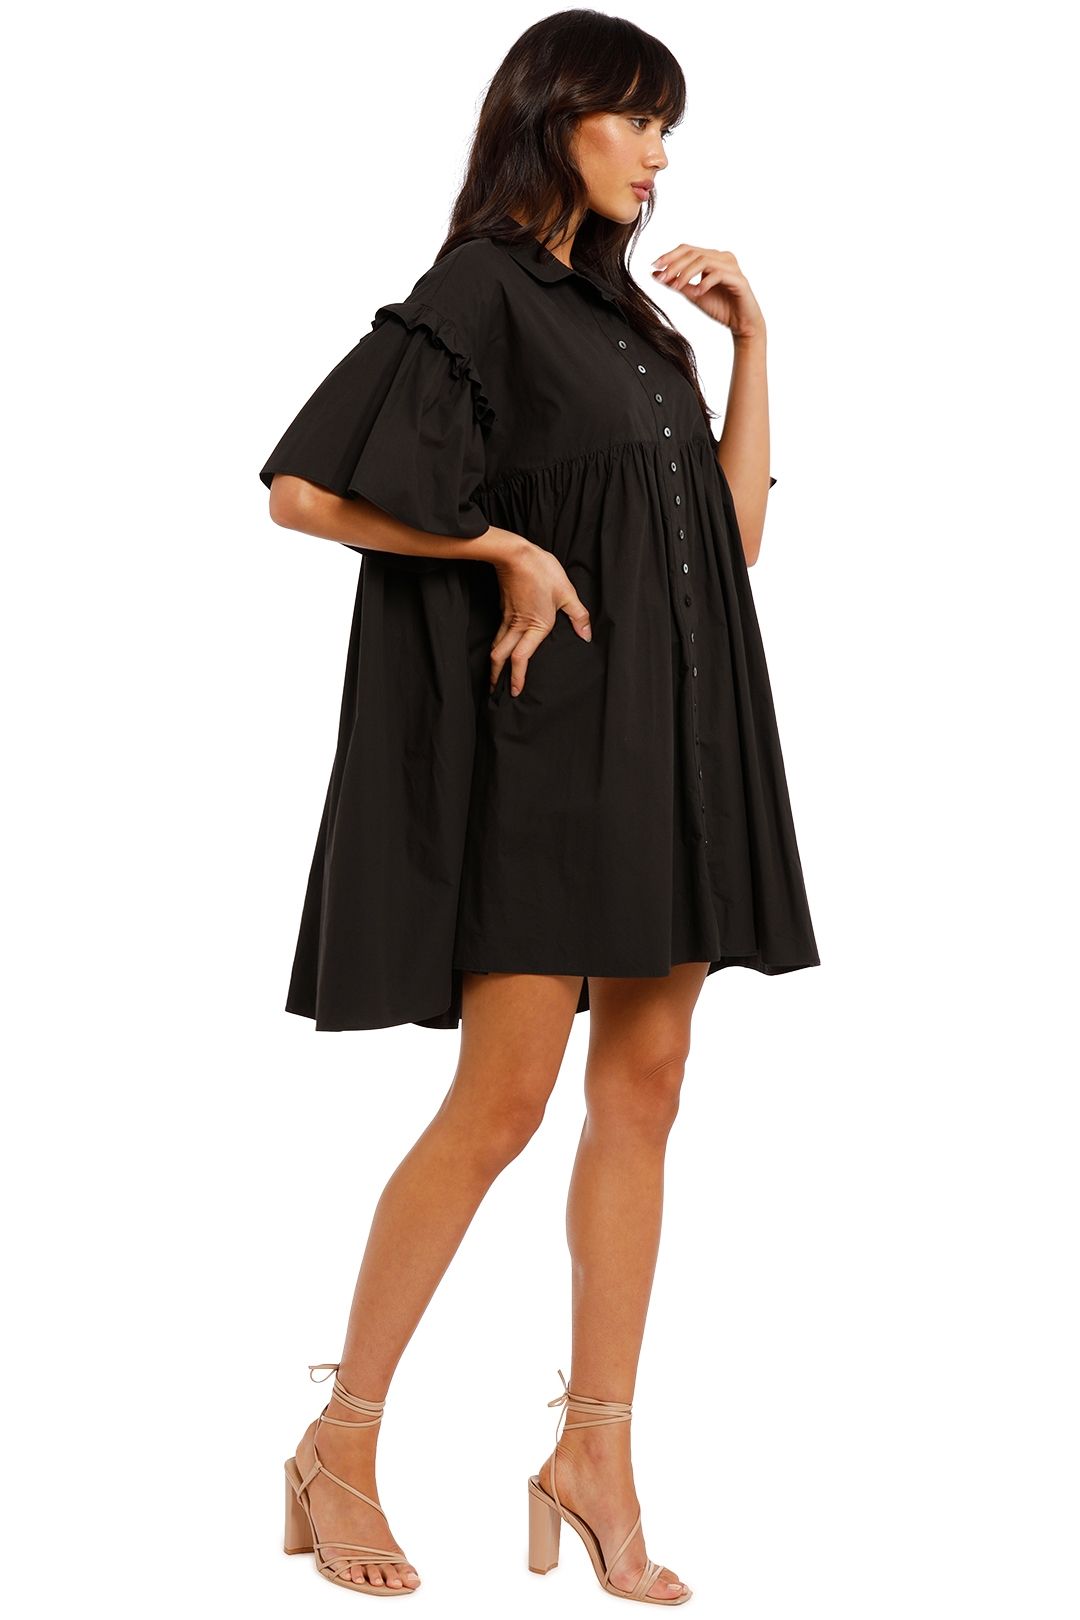 Joslin Ashleigh Smock Mini Dress Black Collared Neck